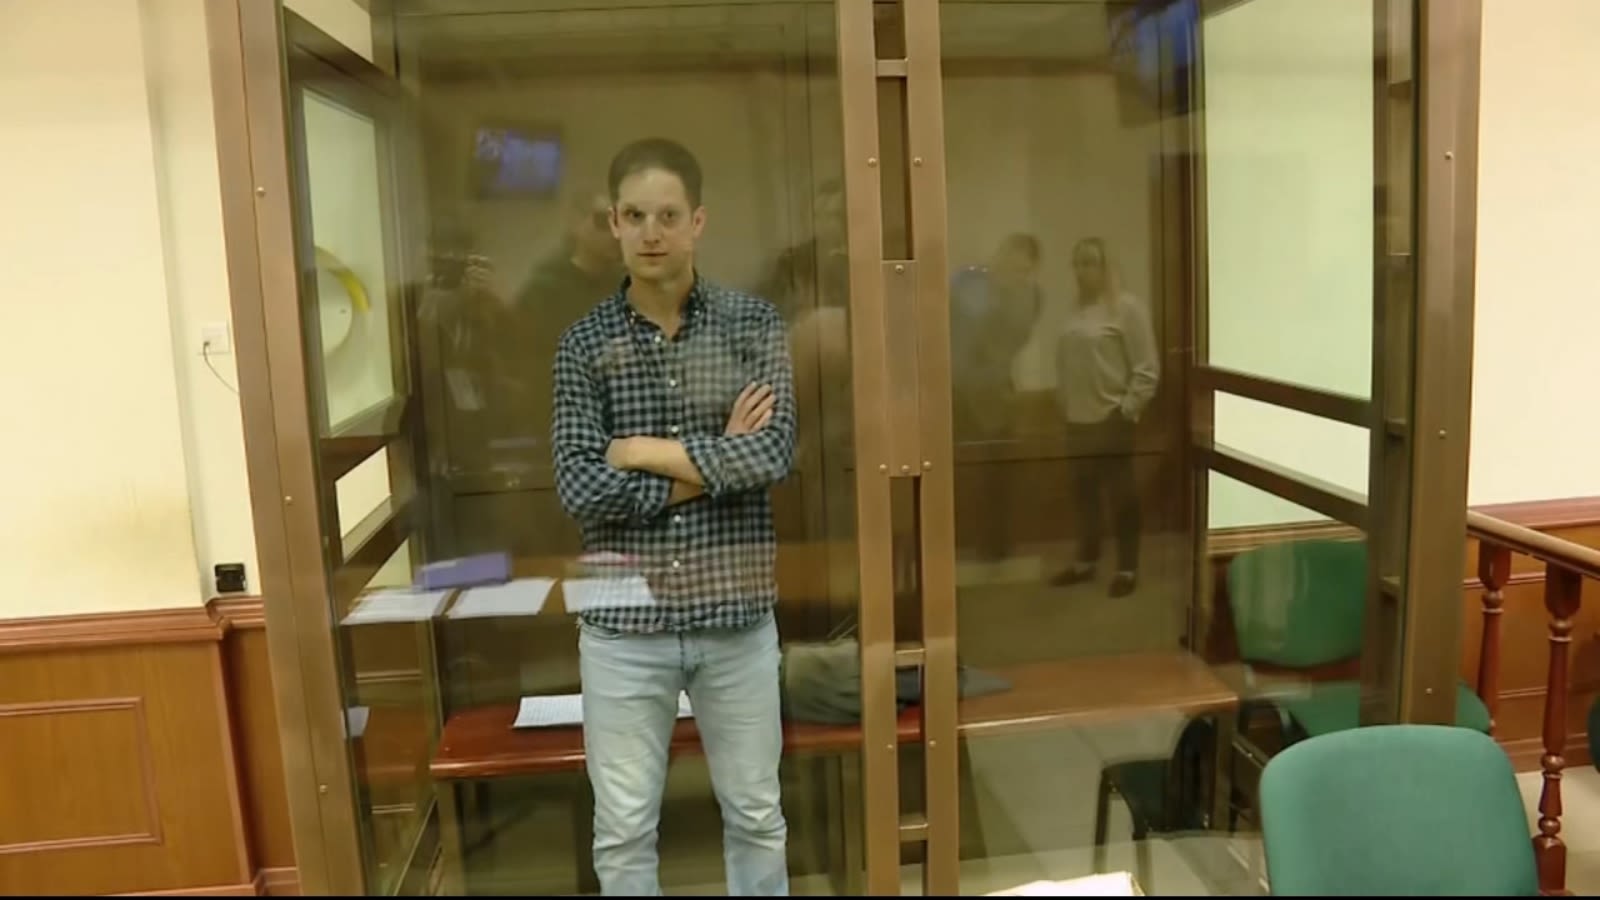 Russia sentences US journalist Evan Gershkovich to 16 years after brief trial